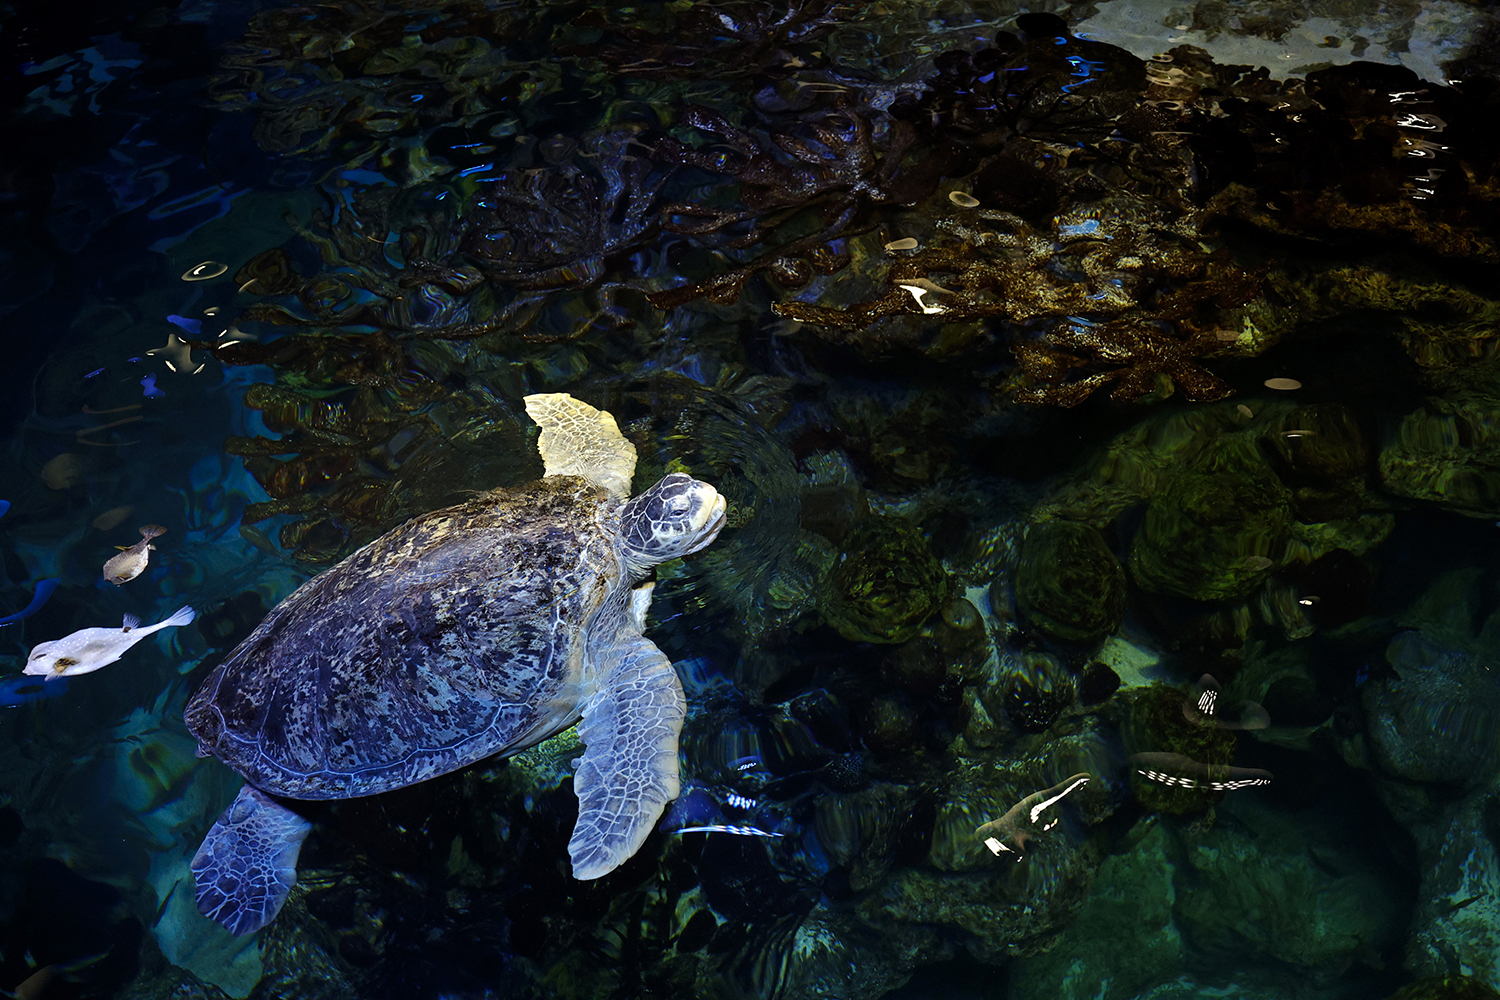 a turtle swimming in an aquarium tank